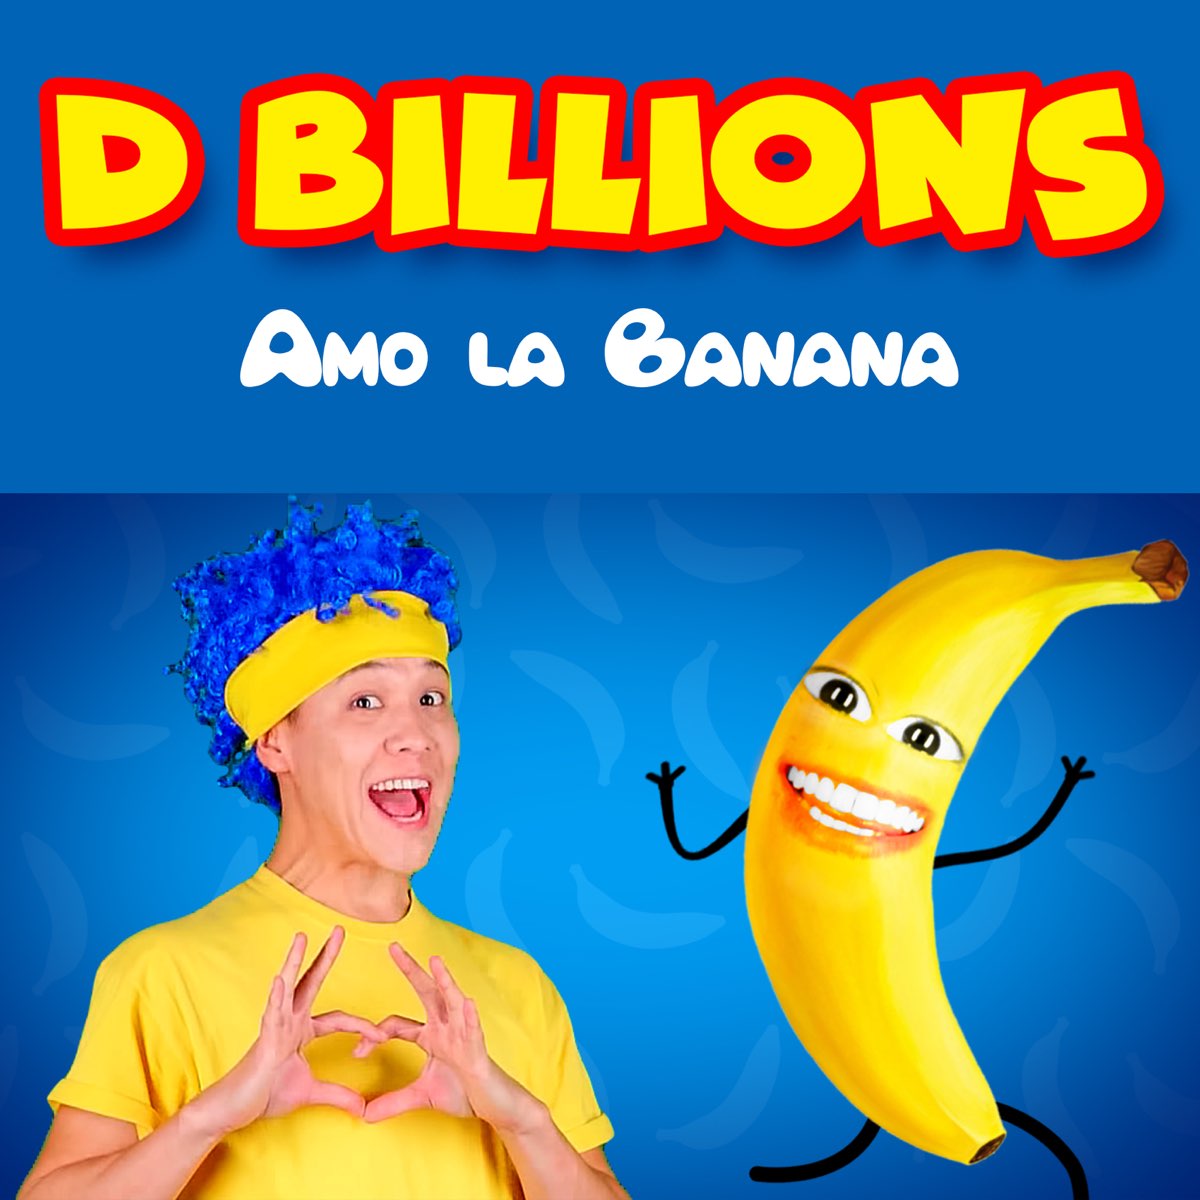 Amo La Banana - Single By D Billions On Apple Music